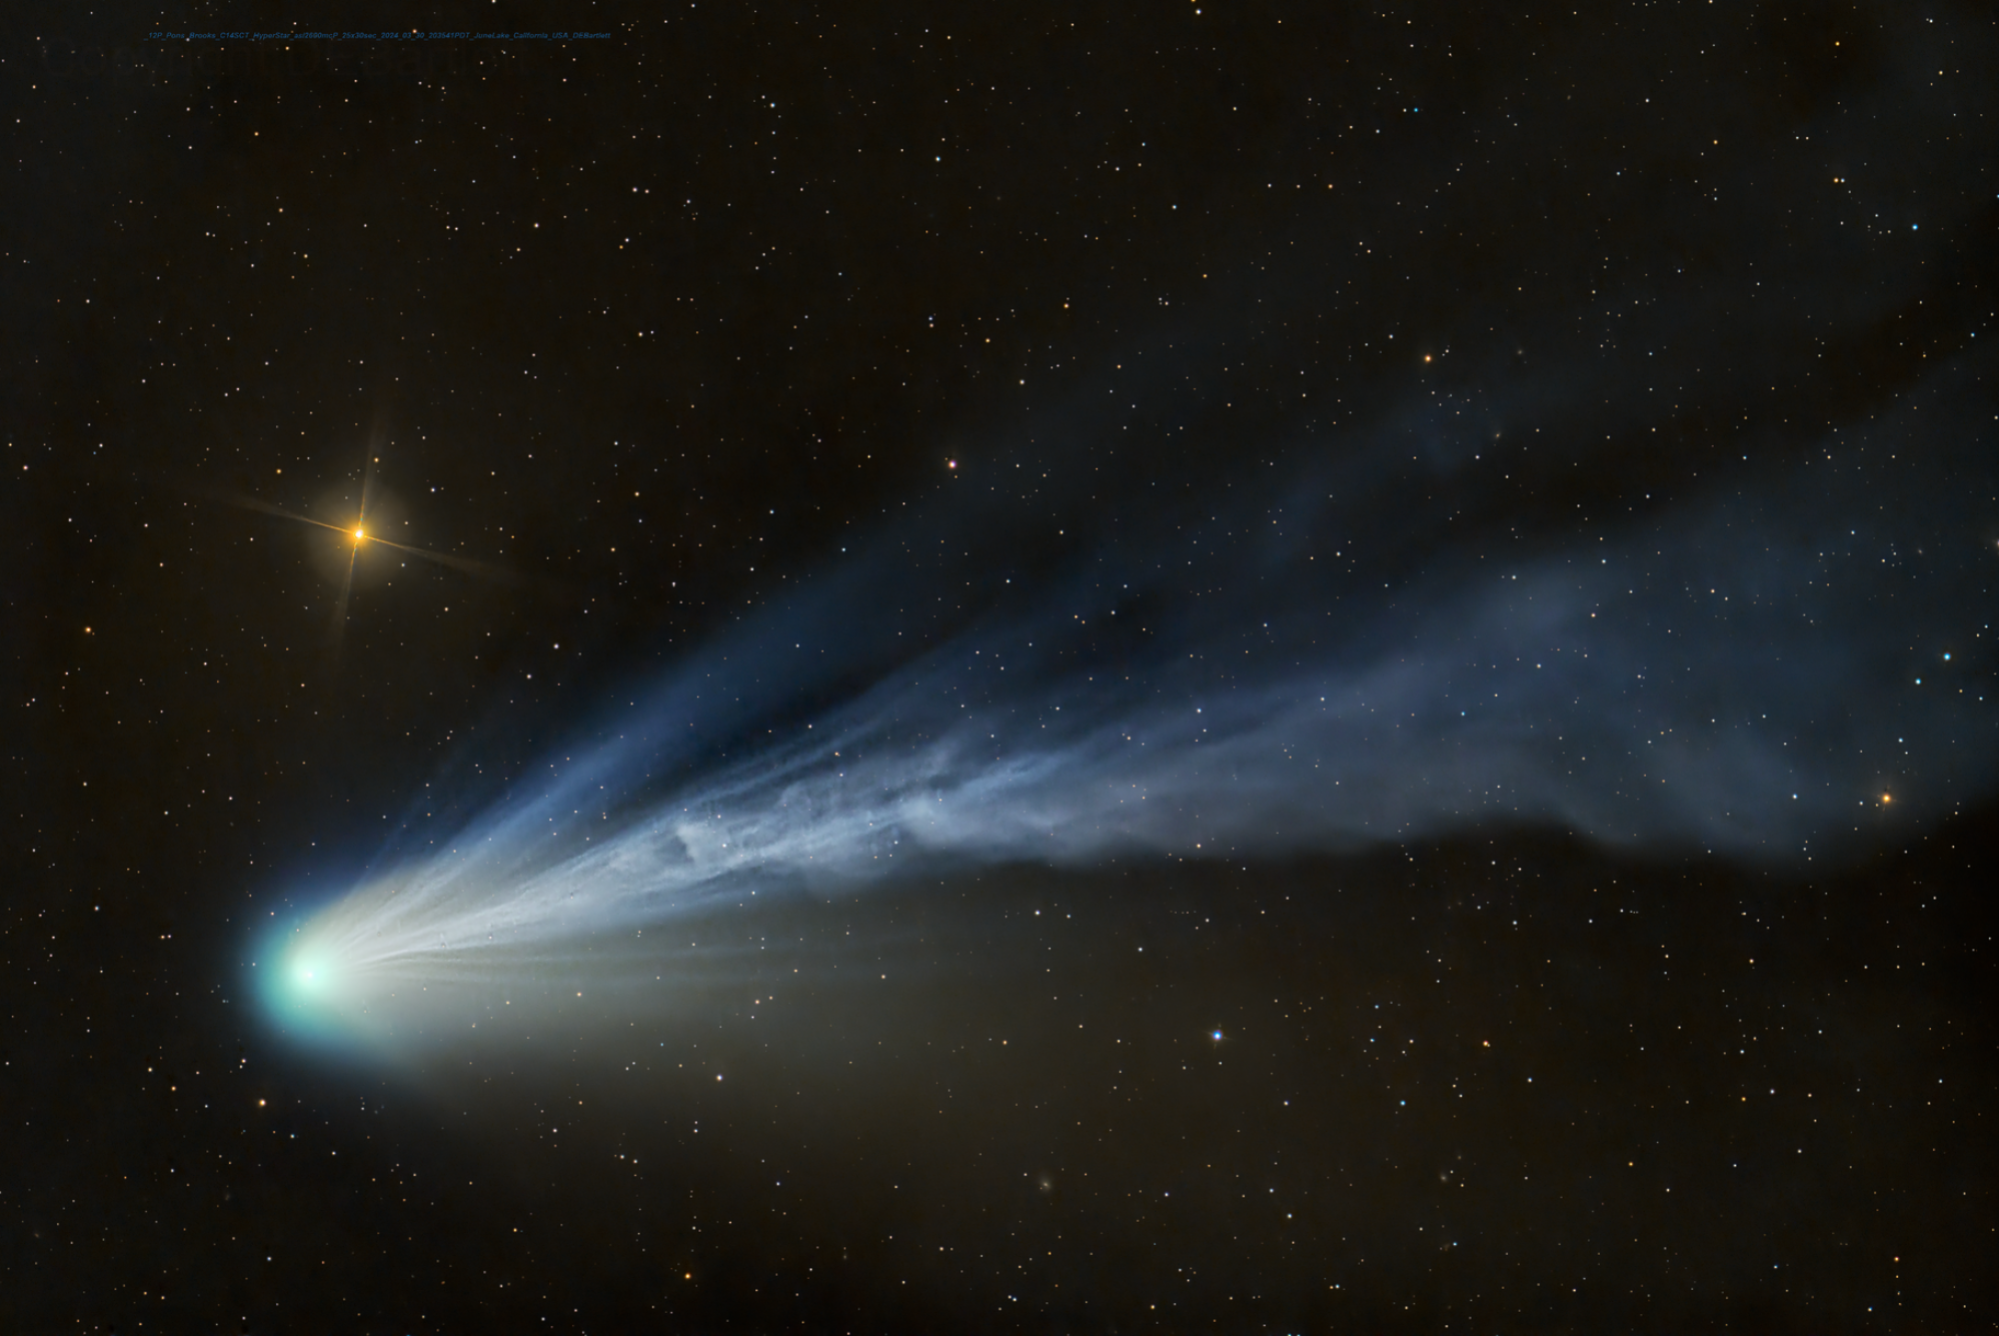 Comet Pons-Brooks hurtling through space